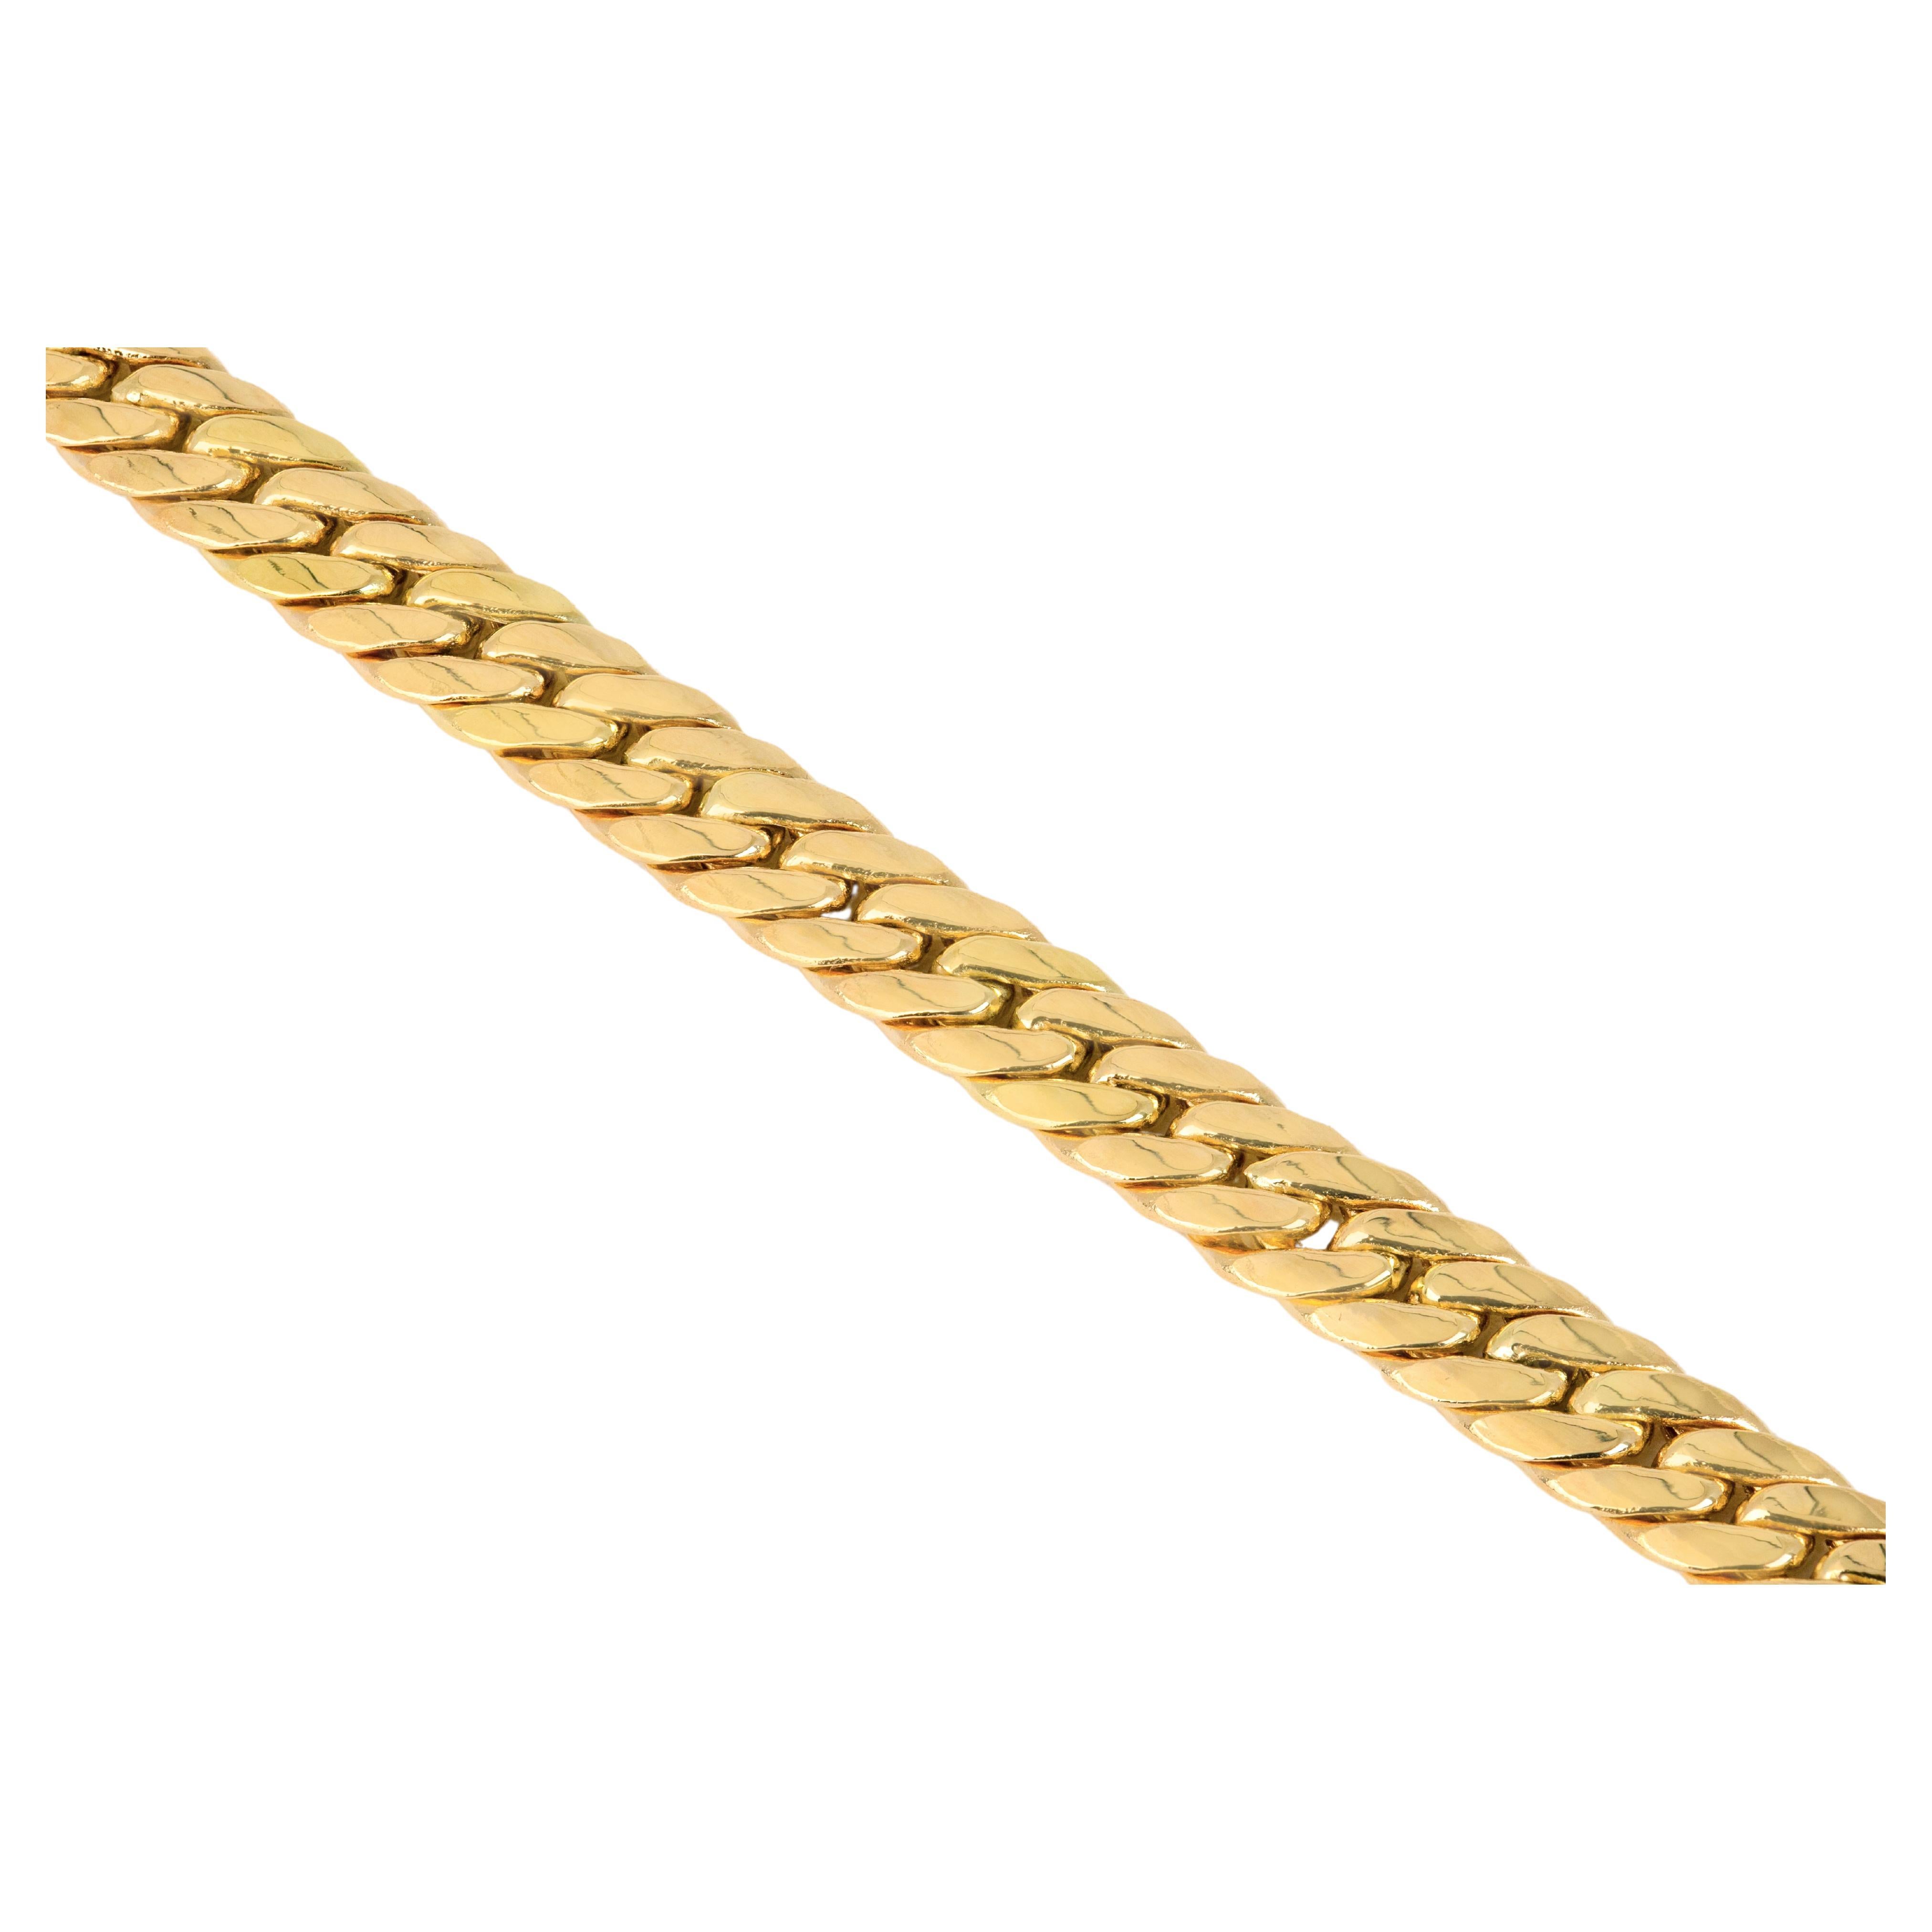 14k Gold Bracelet Gourmette Chain and Channel Lock Model Bracelet